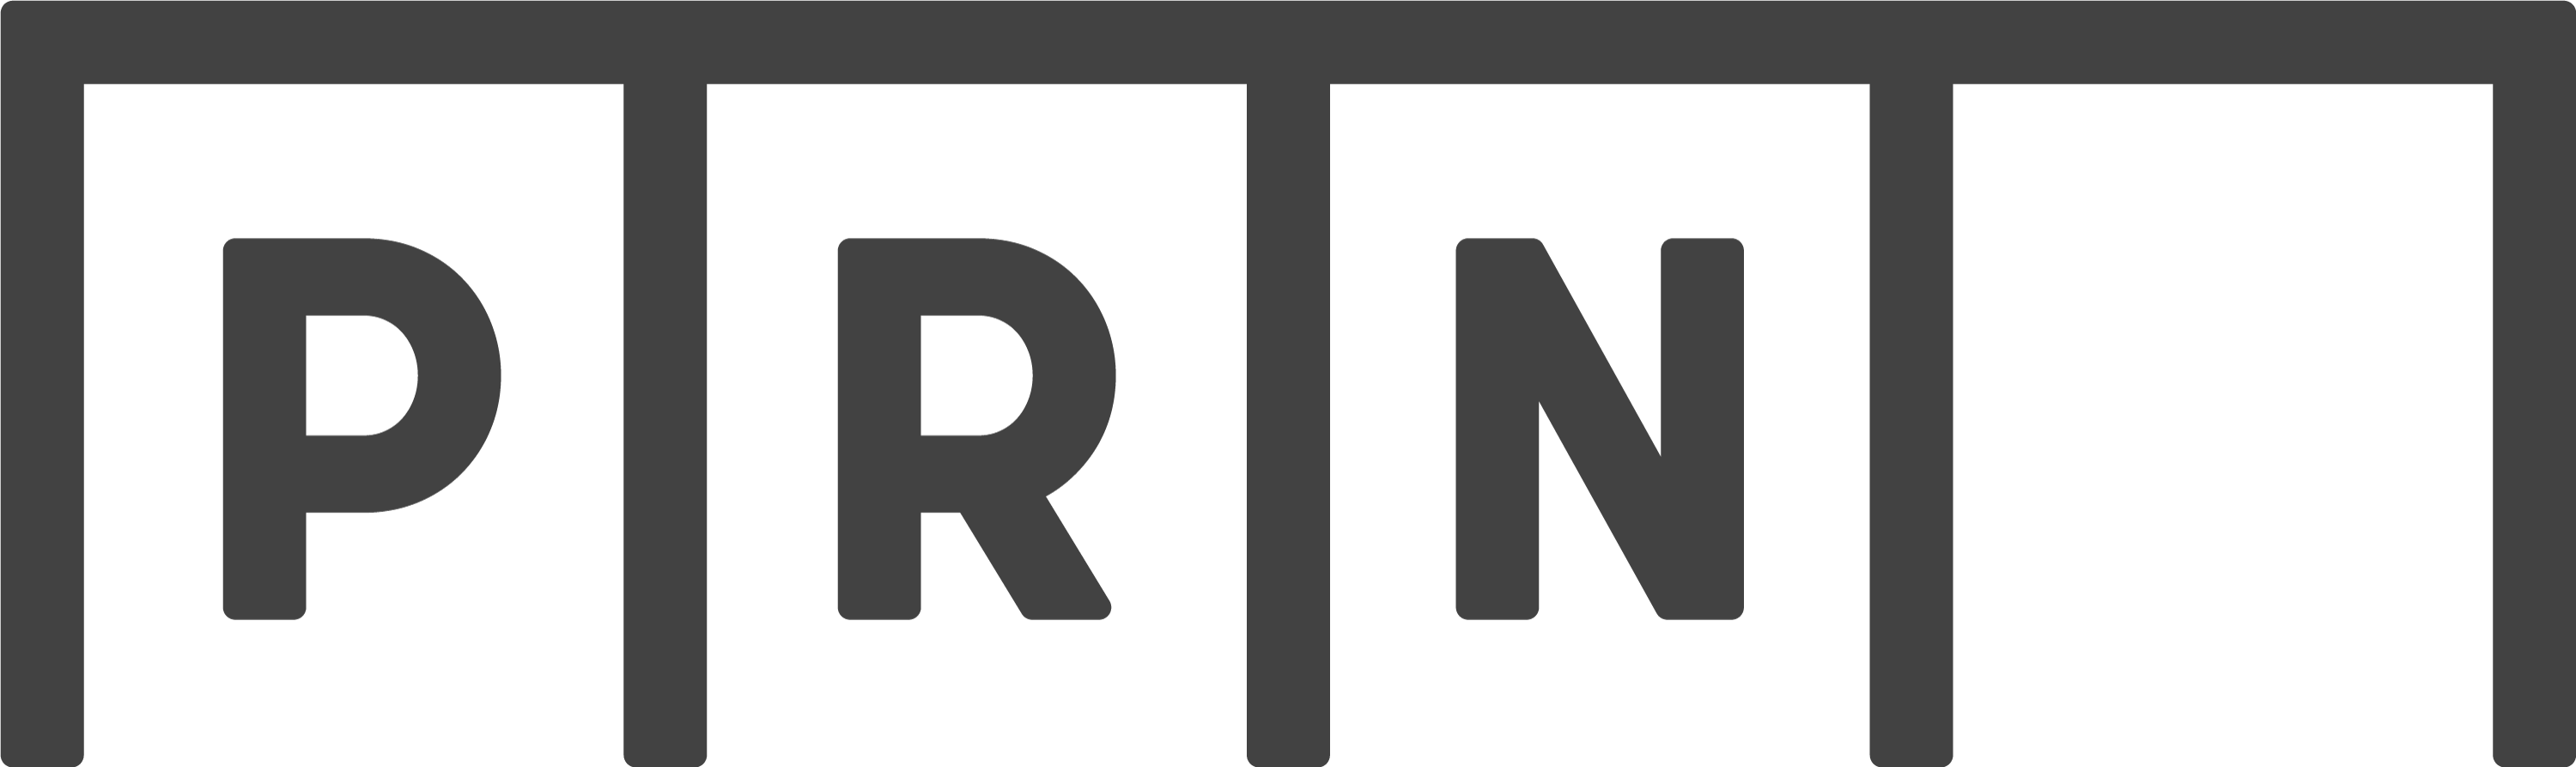 Parking Reform Network logo